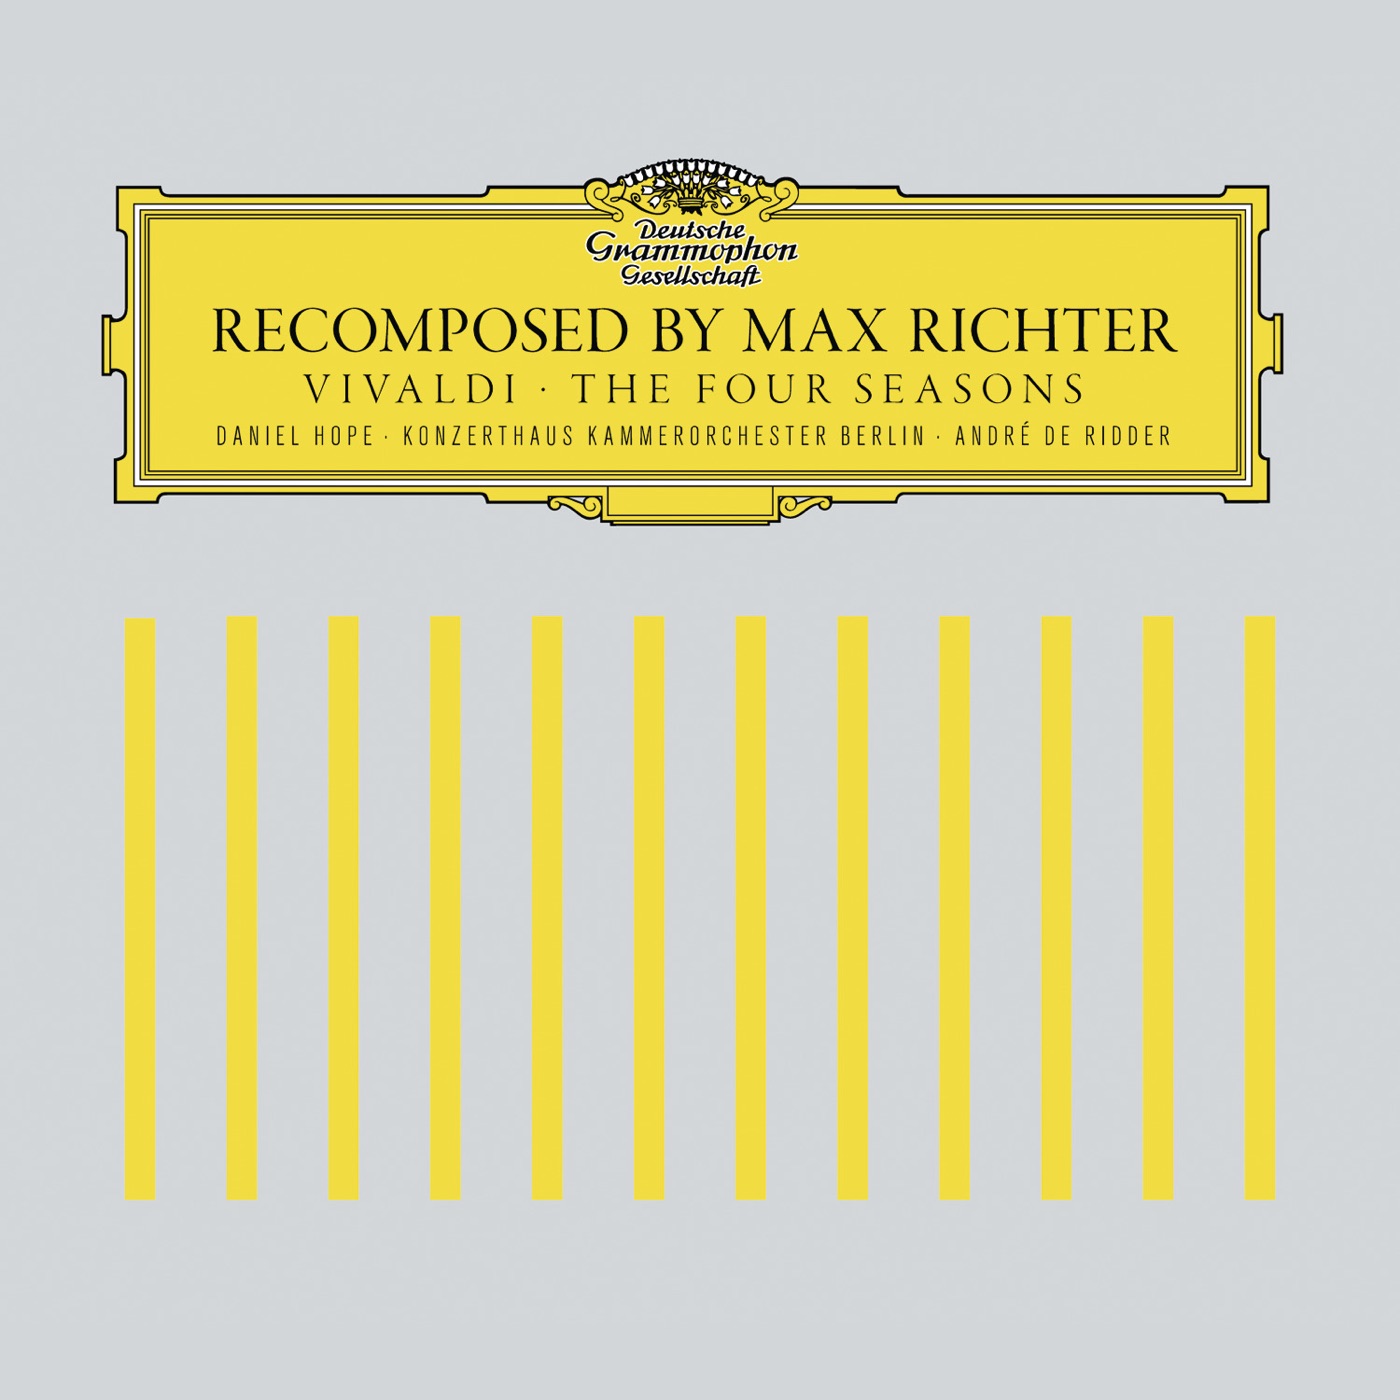 Recomposed By Max Richter: Vivaldi, The Four Seasons by Max Richter, Daniel Hope, Konzerthaus Kammerorchester Berlin, Andre de Ridder